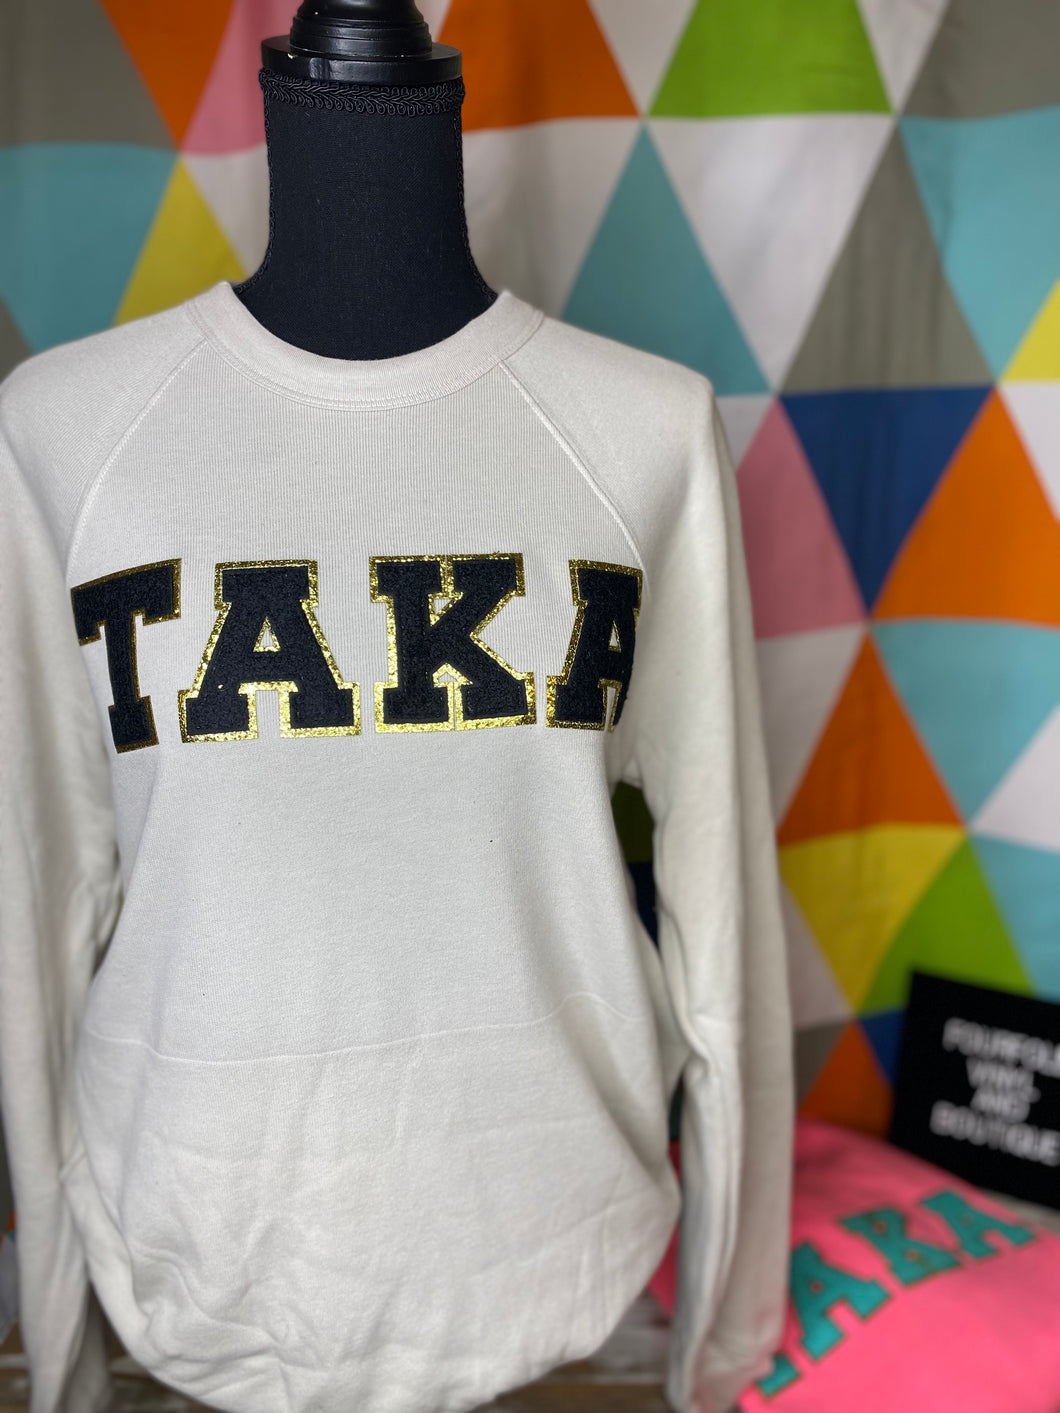 Taka crewneck sweatshirt (please read description)